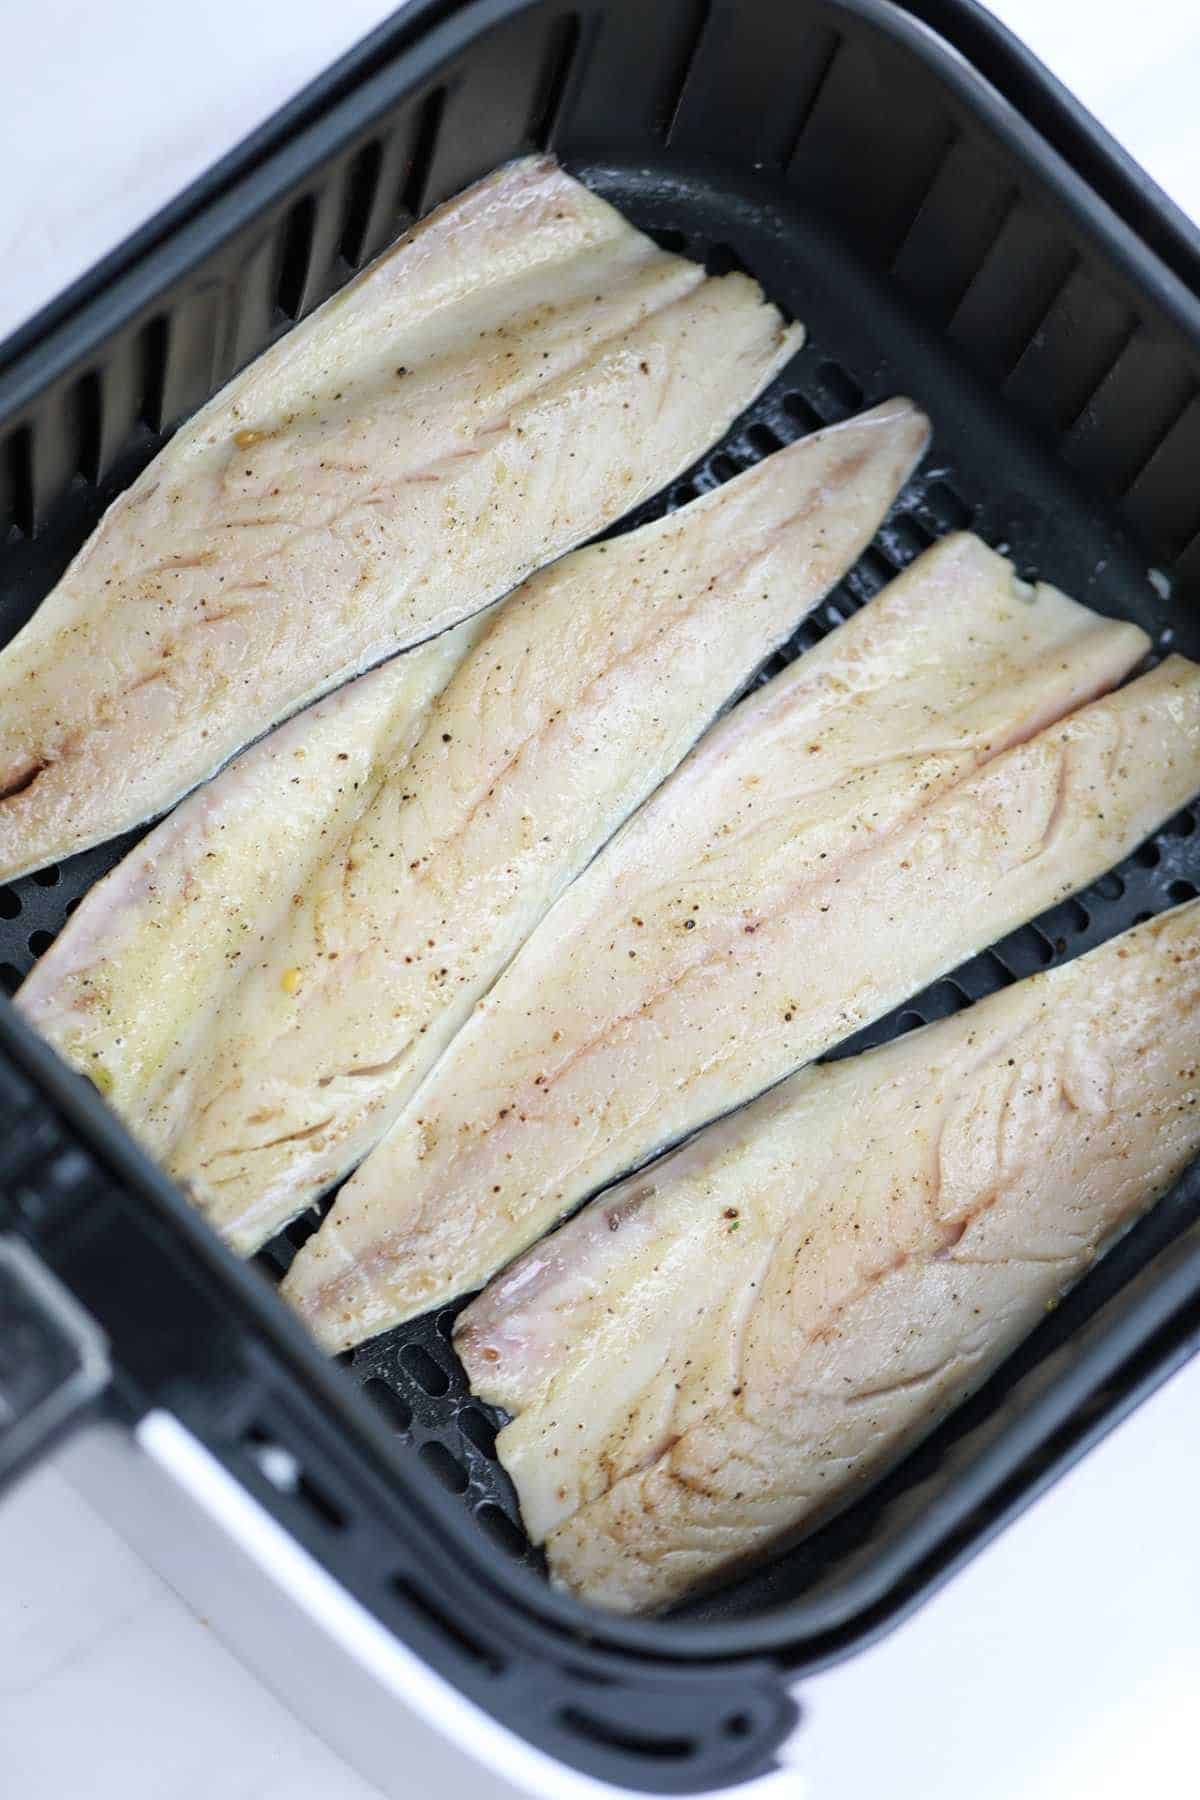 seasoned mackerel arranged in air fryer basket.